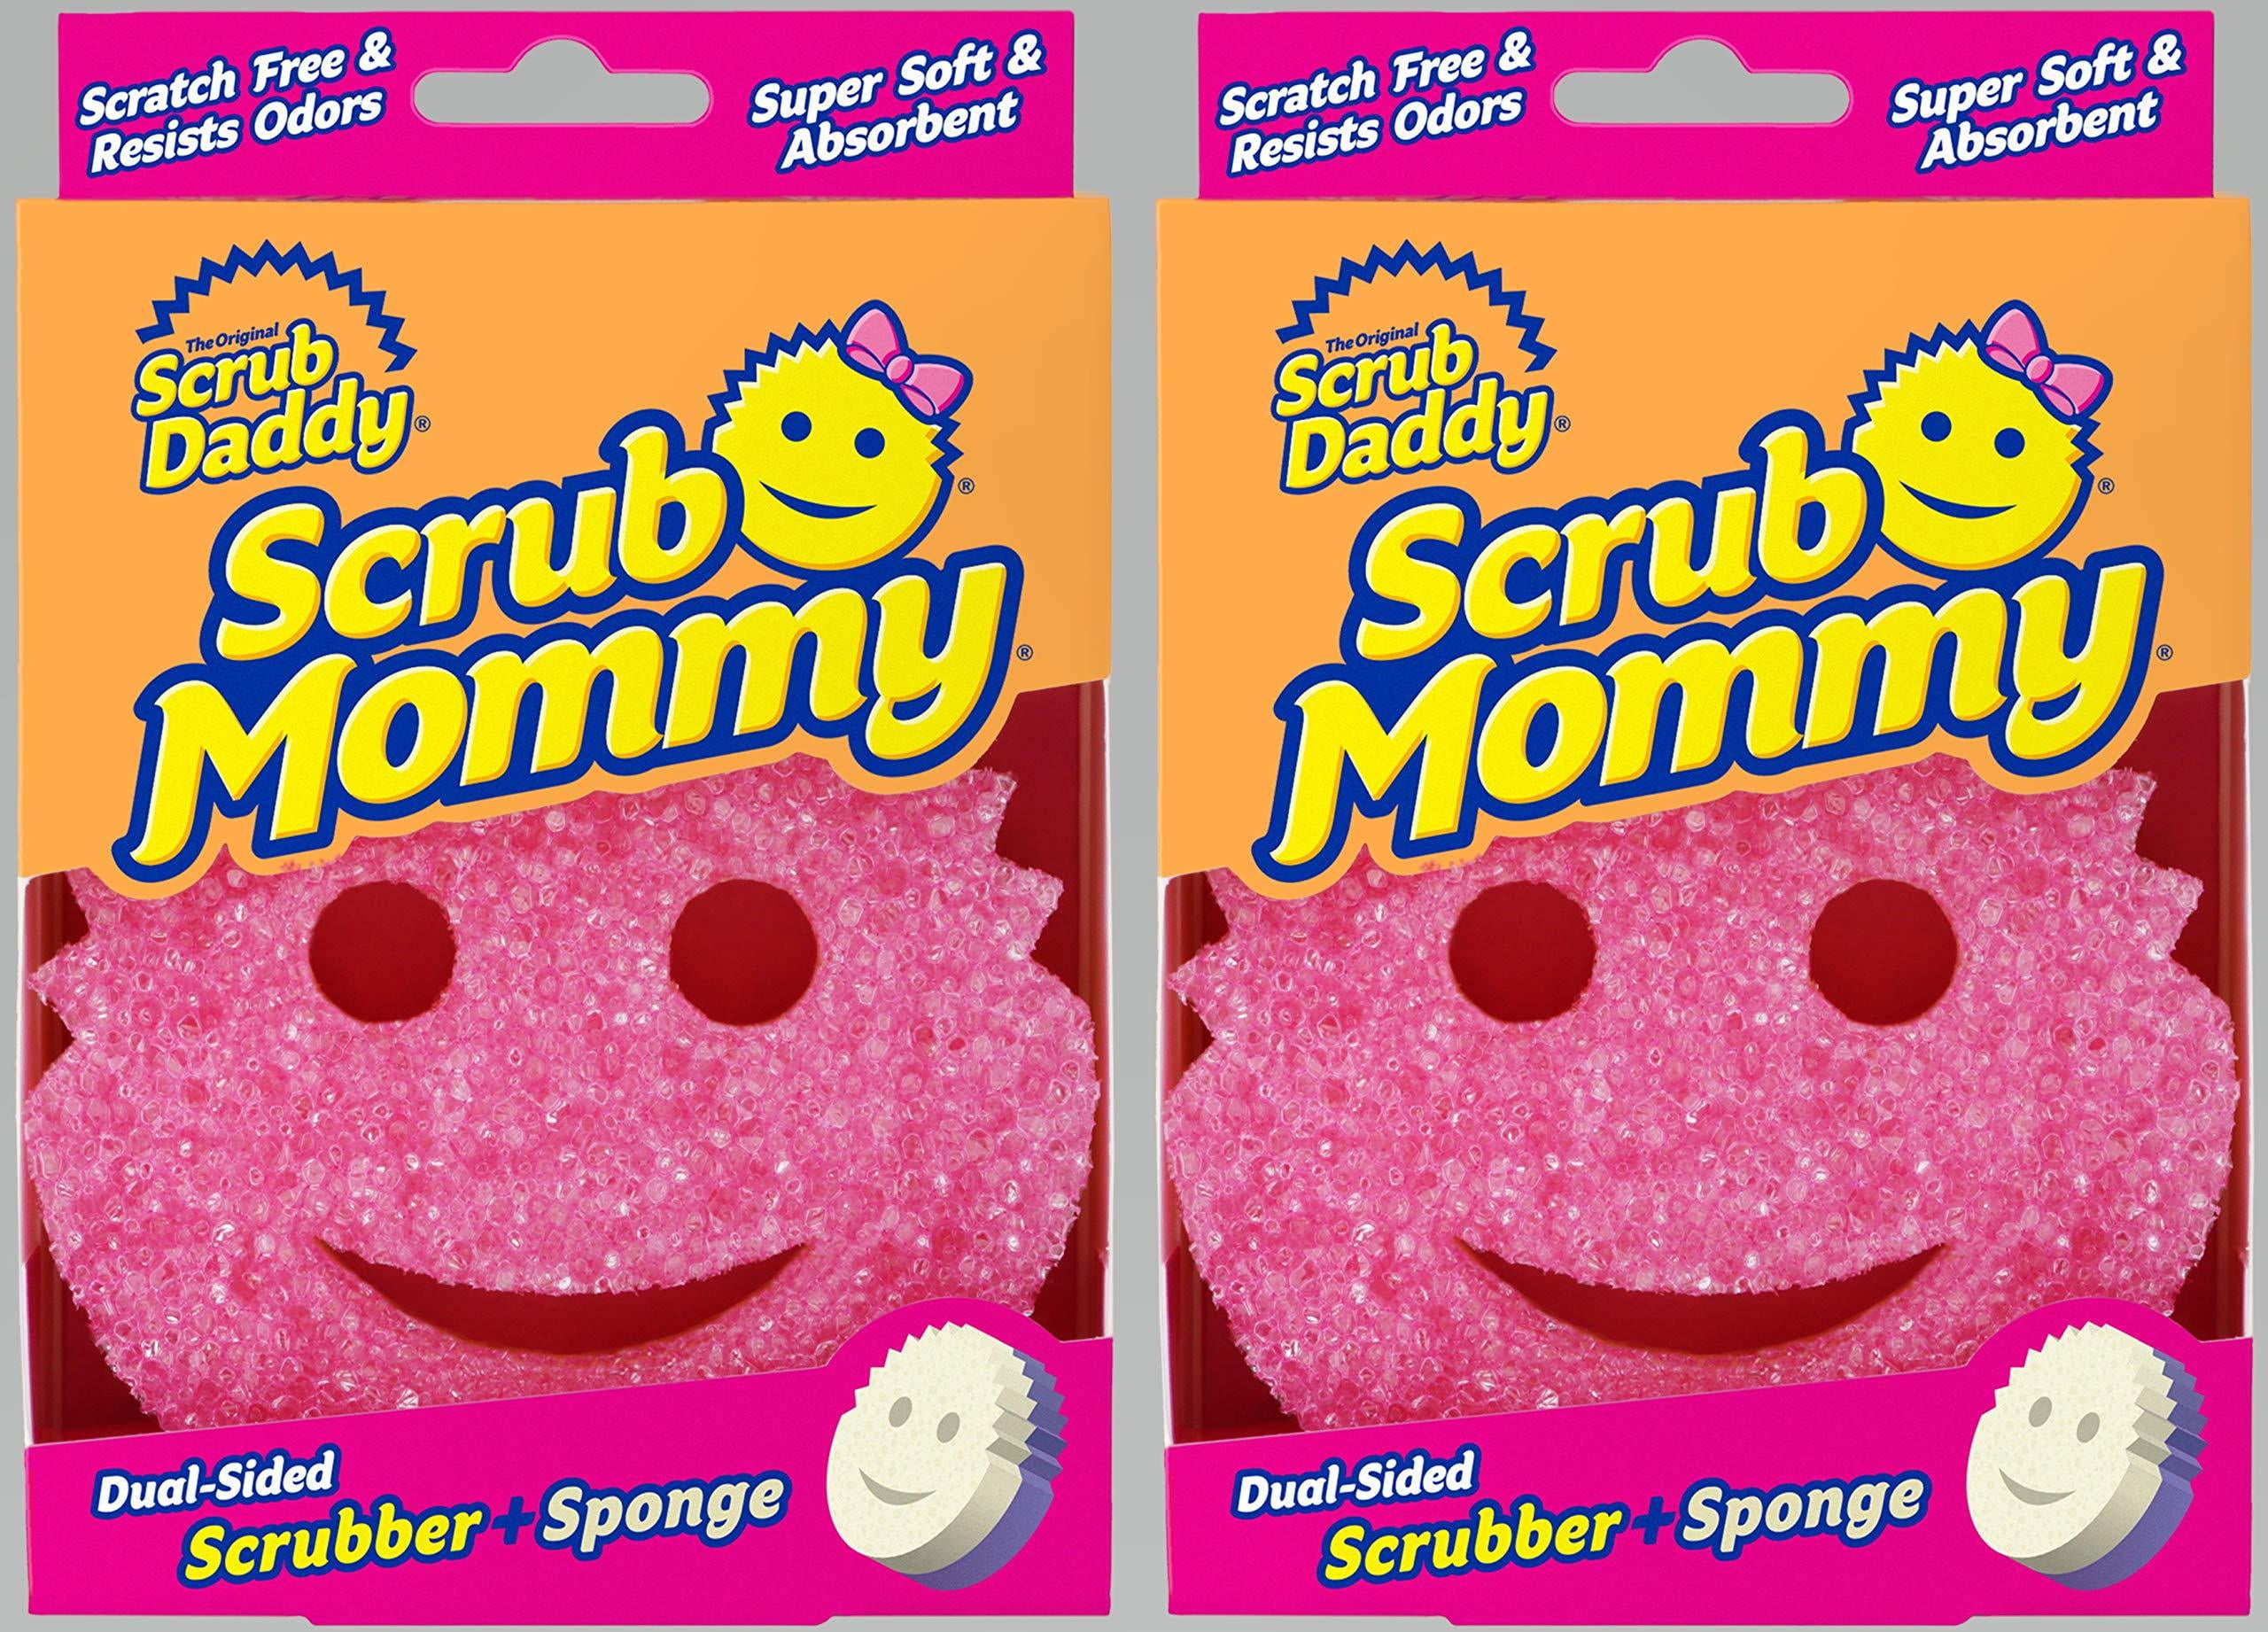 Scrub Daddy- Scrub Daddy Dye Free- FlexTexture Sponge, Soft in Warm Water,  Firm in Cold, Deep Cleaning, Dishwasher Safe, Multiuse, Scratch Free, Odor